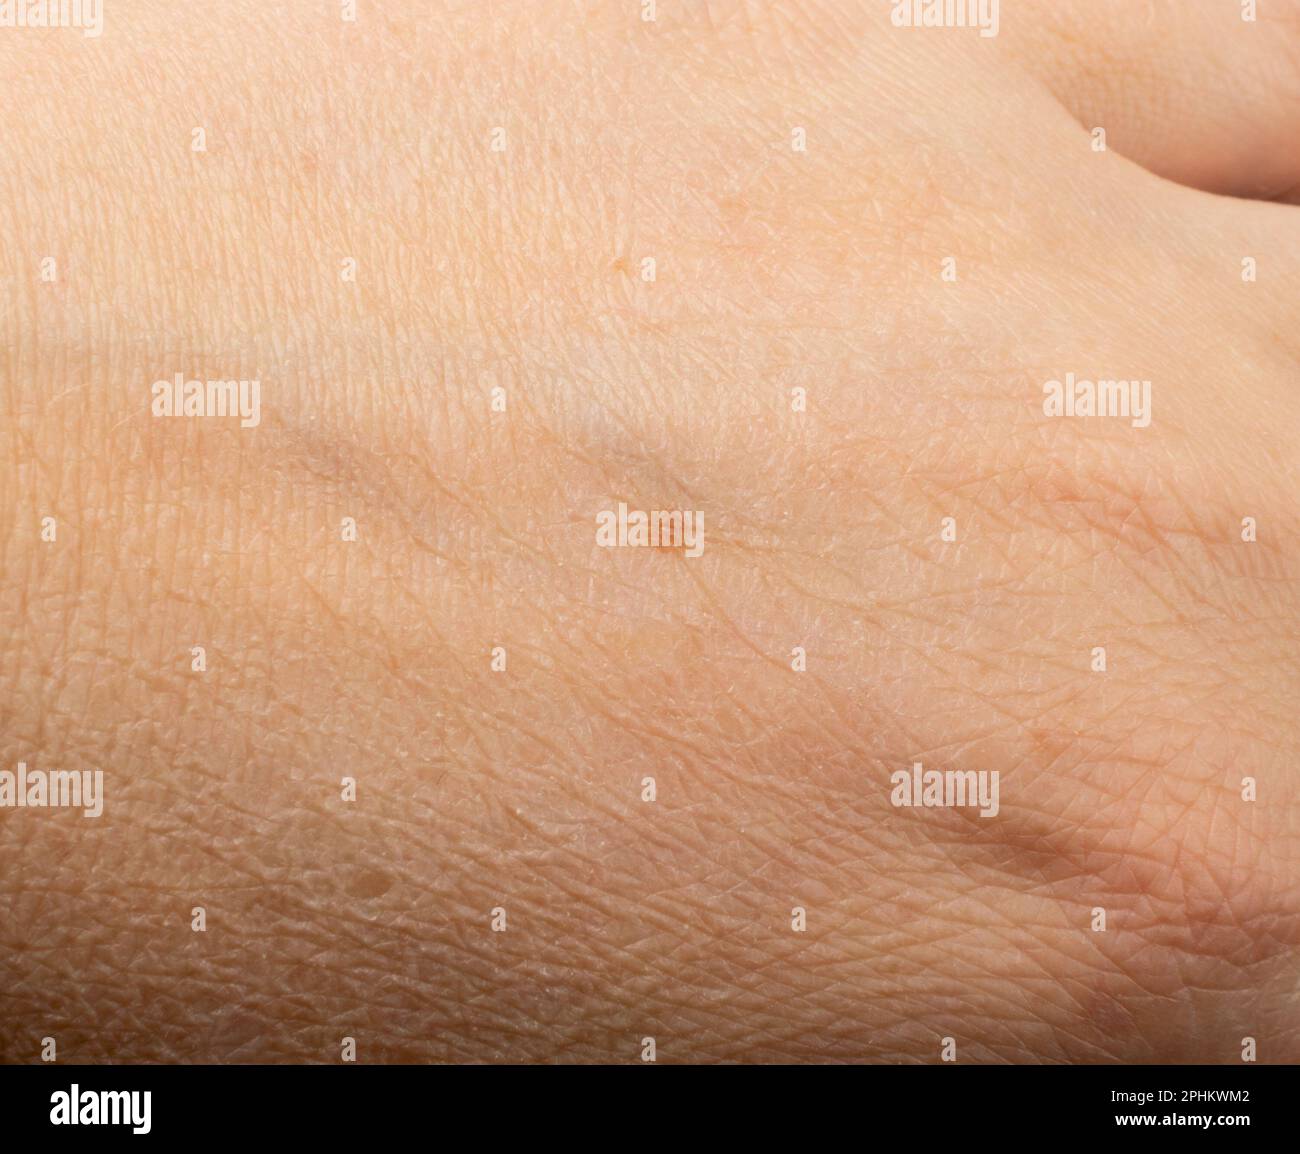 Skin mole closeup. Macro photo of blemish similar to melanoma, brown nevus, small birthmark, spot on human skin Stock Photo